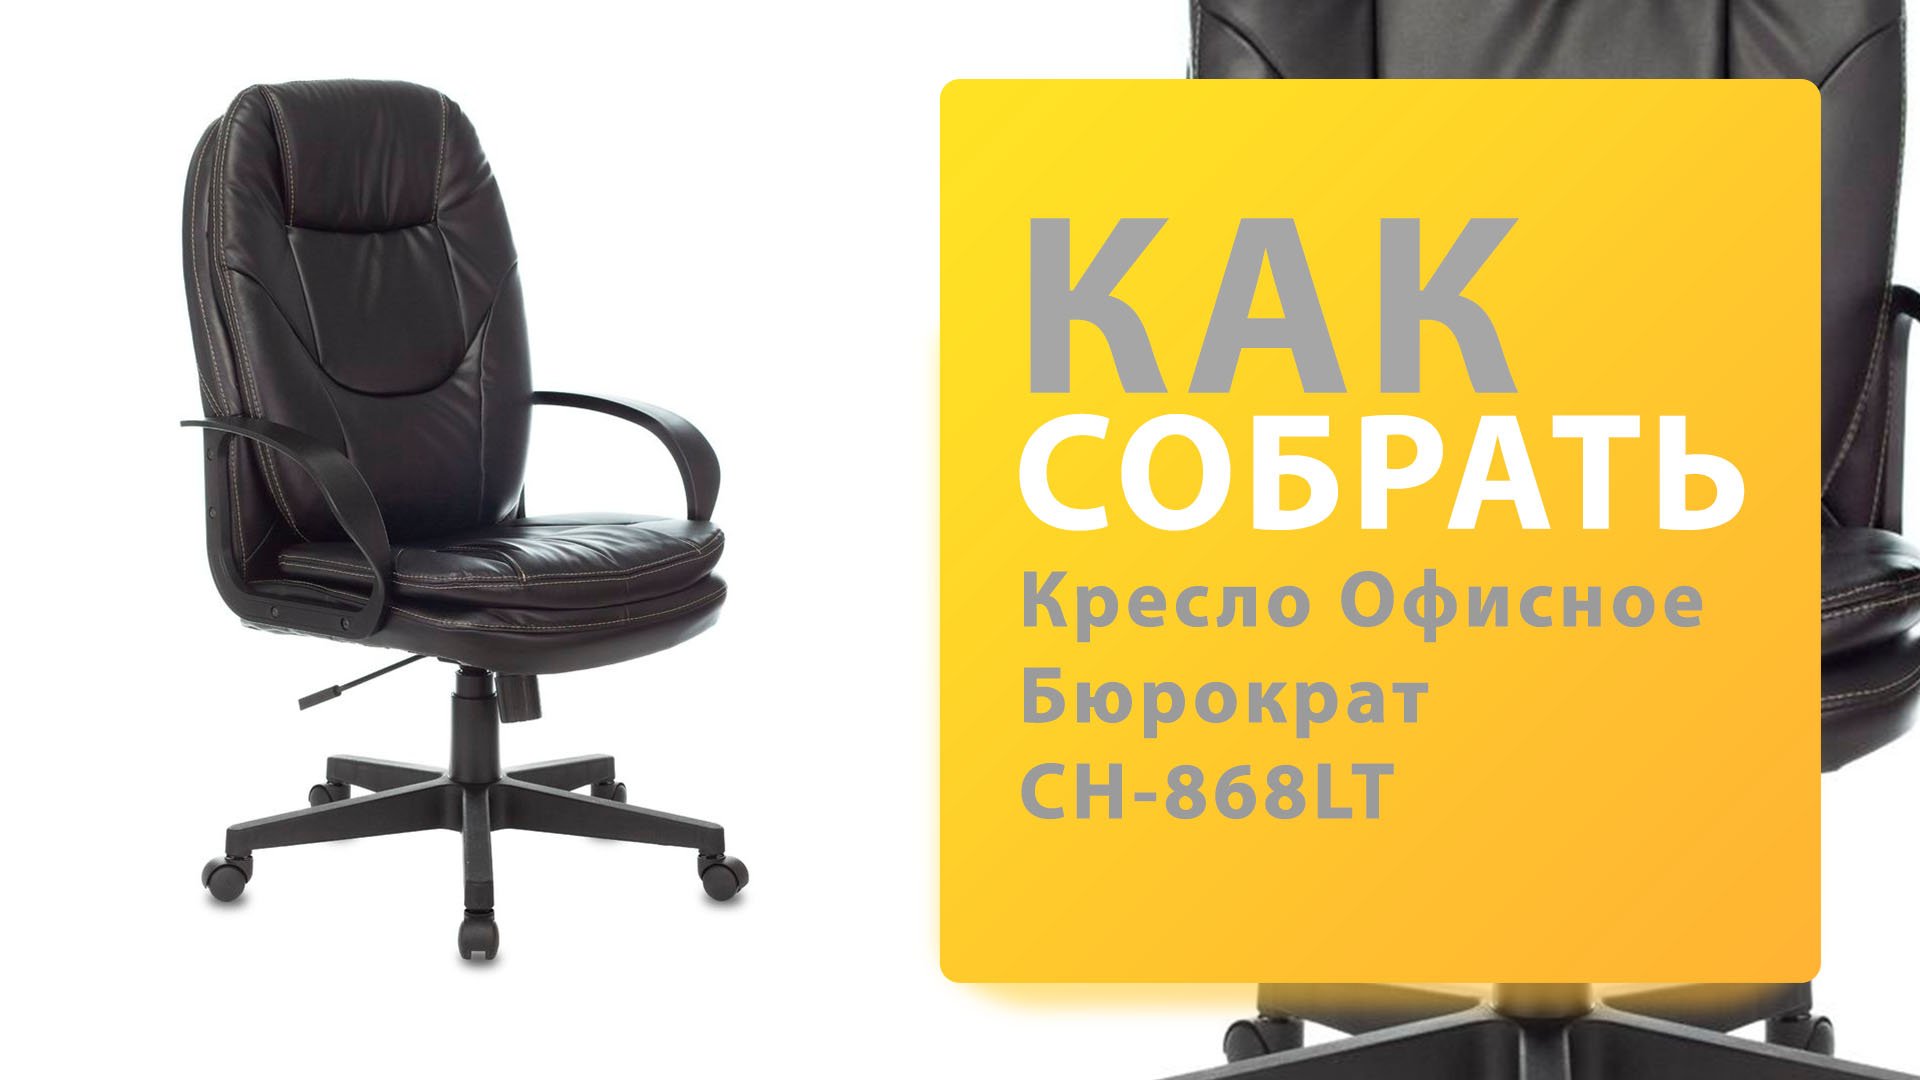 Кресло руководителя Бюрократ Ch-868lt/#b